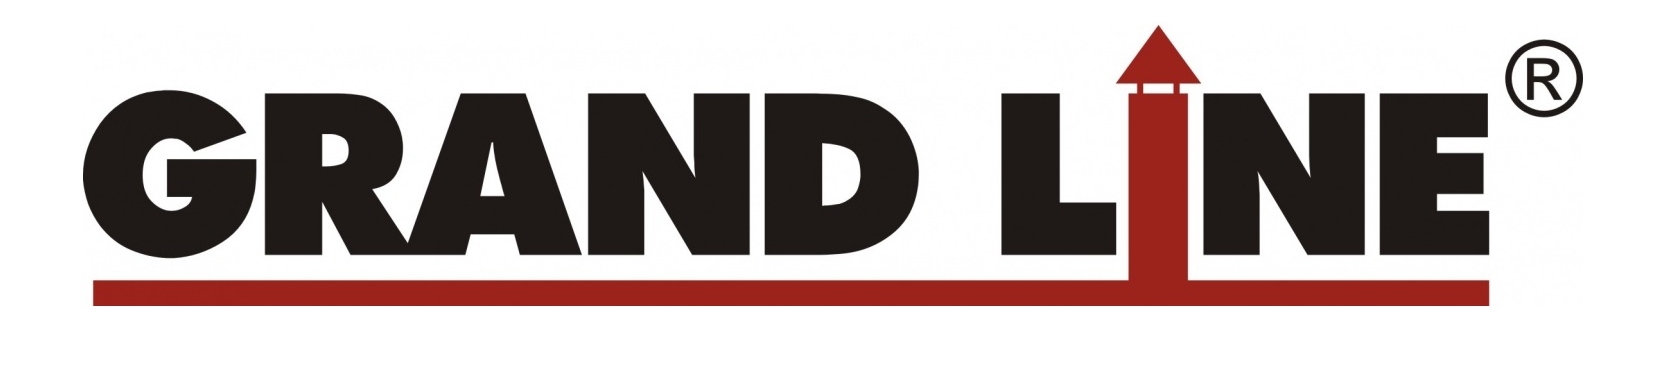 grant line logo 2